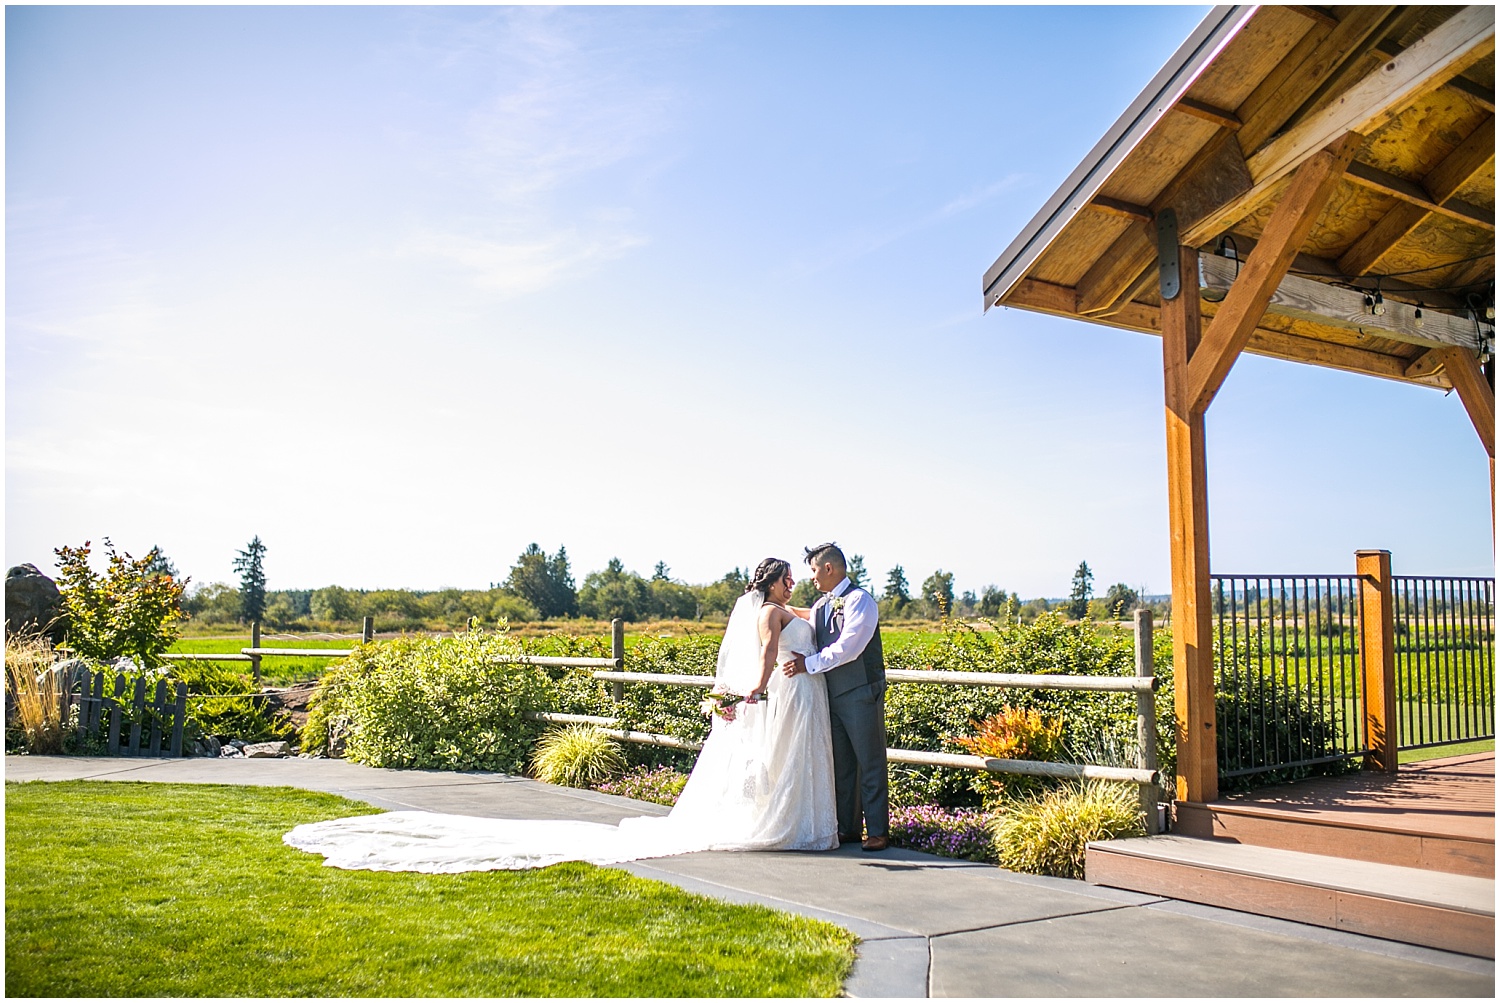 Carleton Farm wedding venue photos in Lake Stevens, Washington.